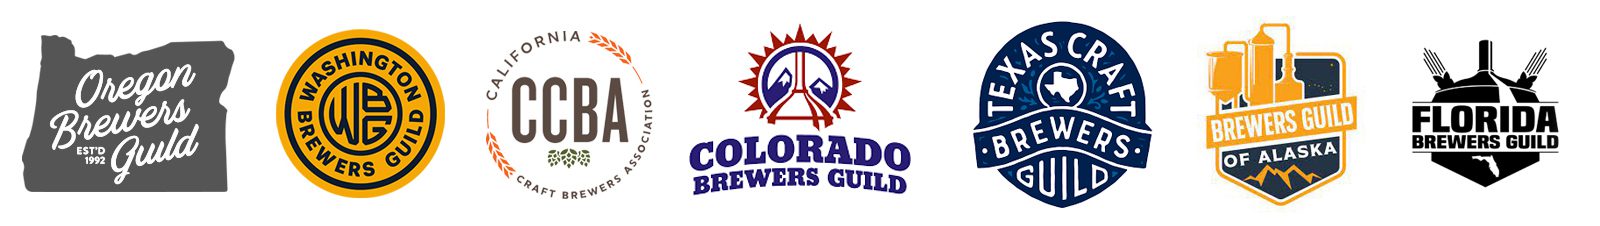 Cascade floors brewers association memberships and guilds